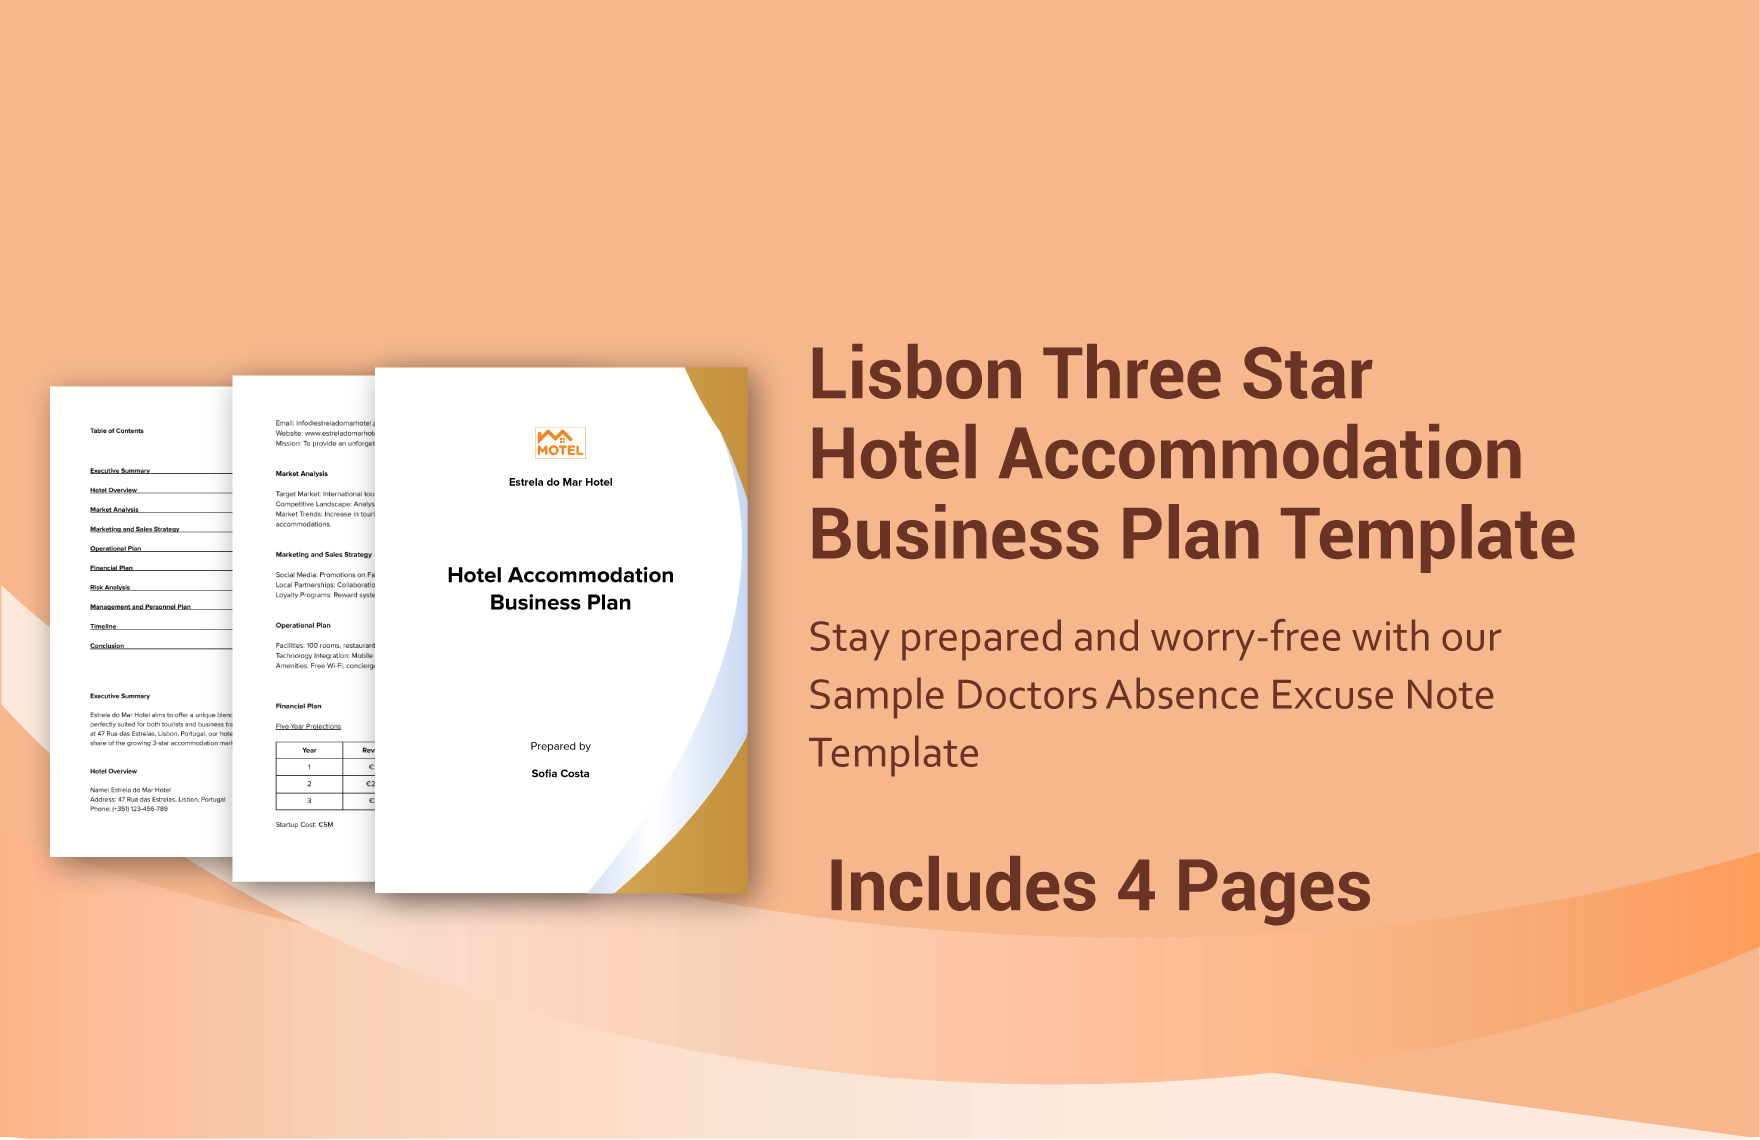 lisbon-three-star-hotel-accommodation-business-plan